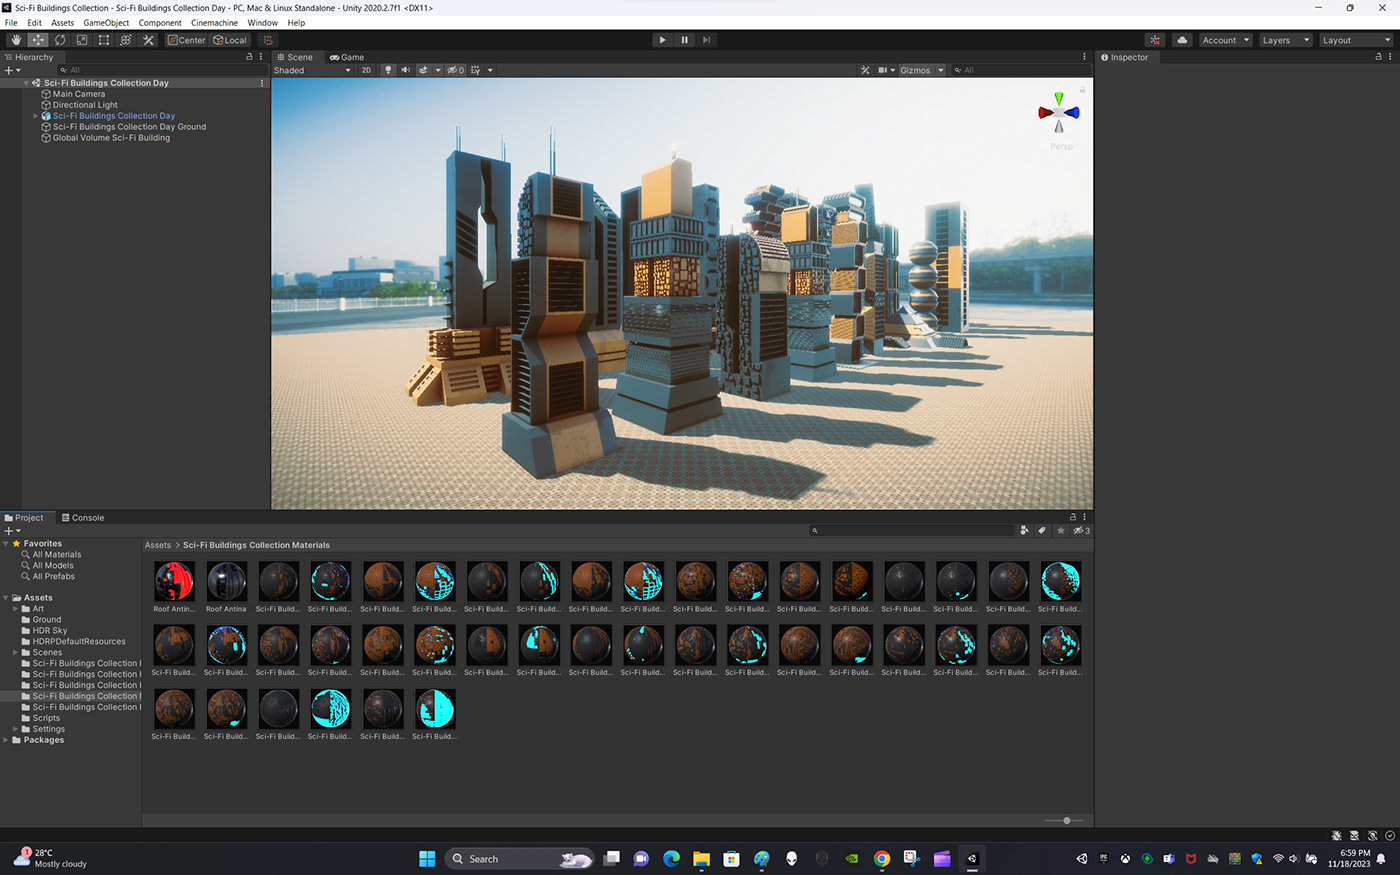 buildings sci-fi Unity 3d Unreal Engine 5 BPR visualization 3ds max architecture HDRP scifi-buildings